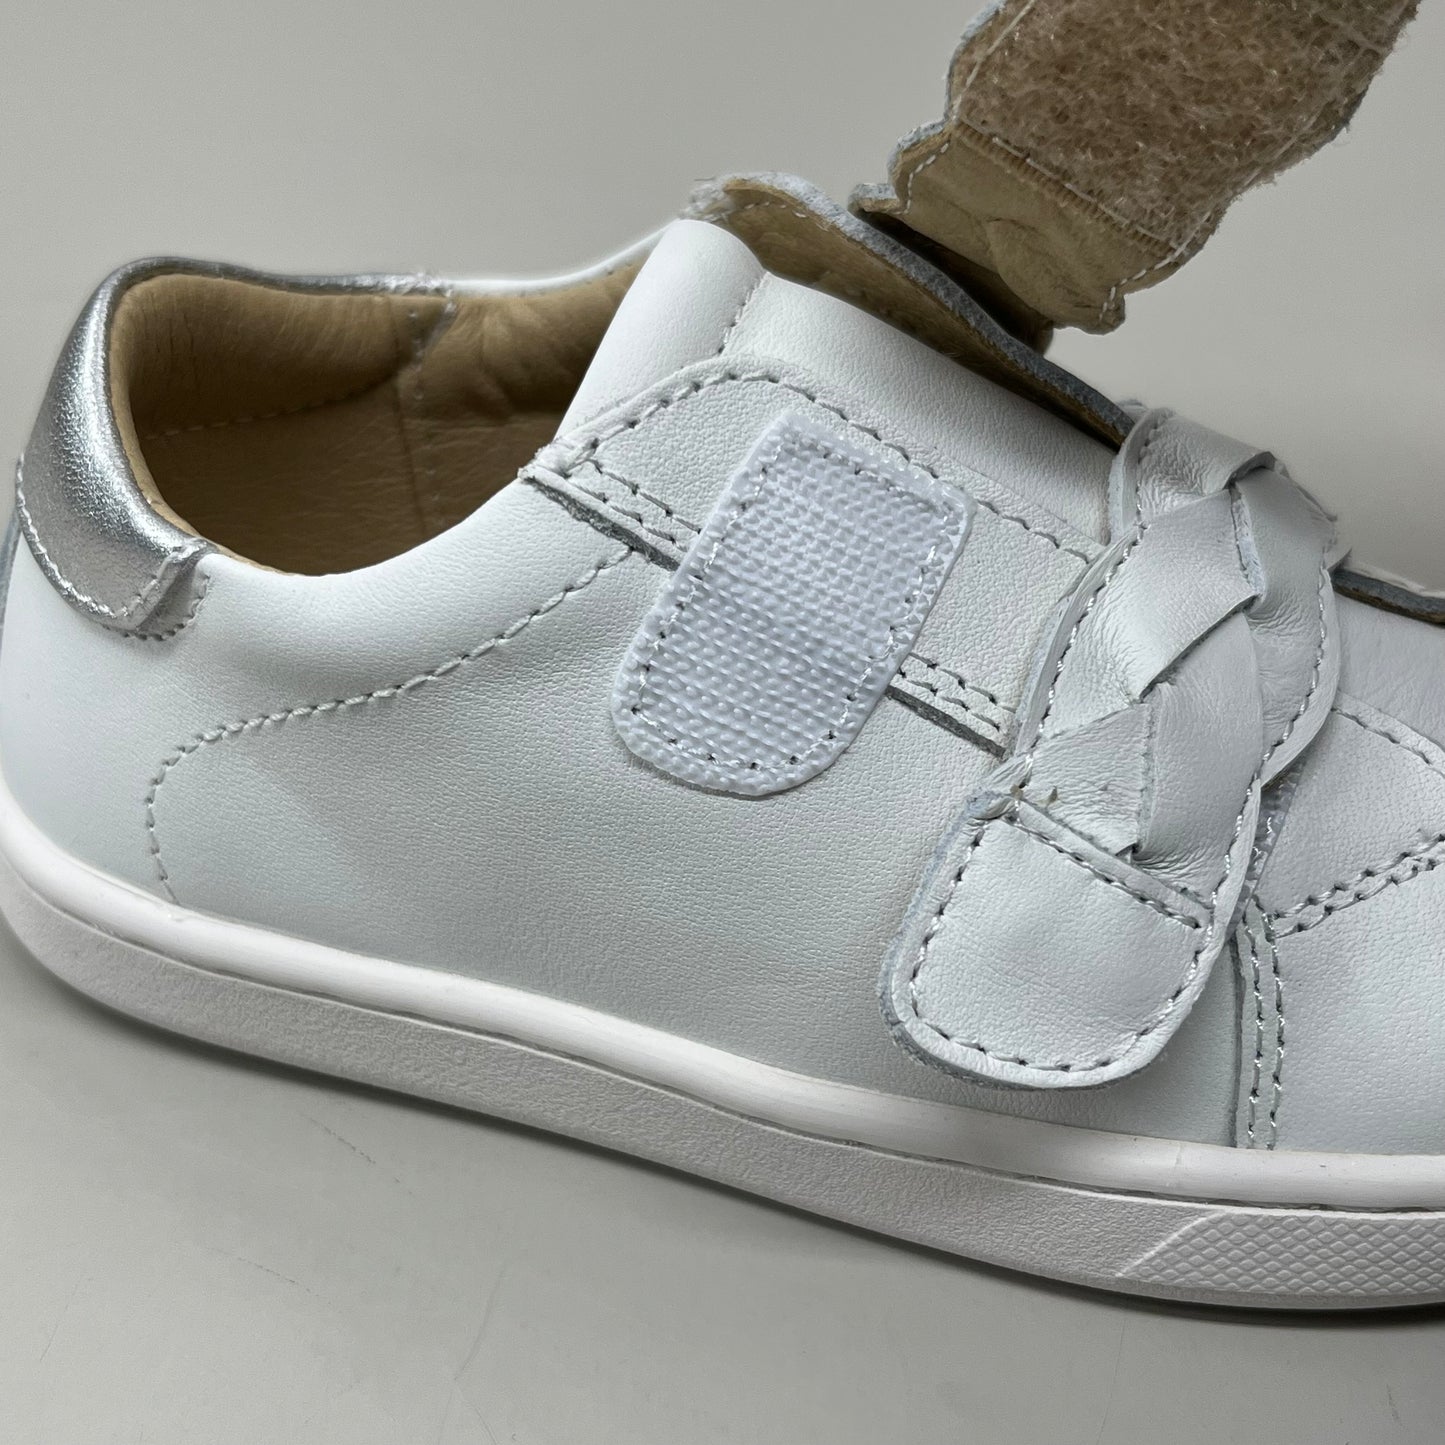 OLD SOLES Baby Plats Leather Shoe Sz 9.5 EU 26 Snow / Silver #6134